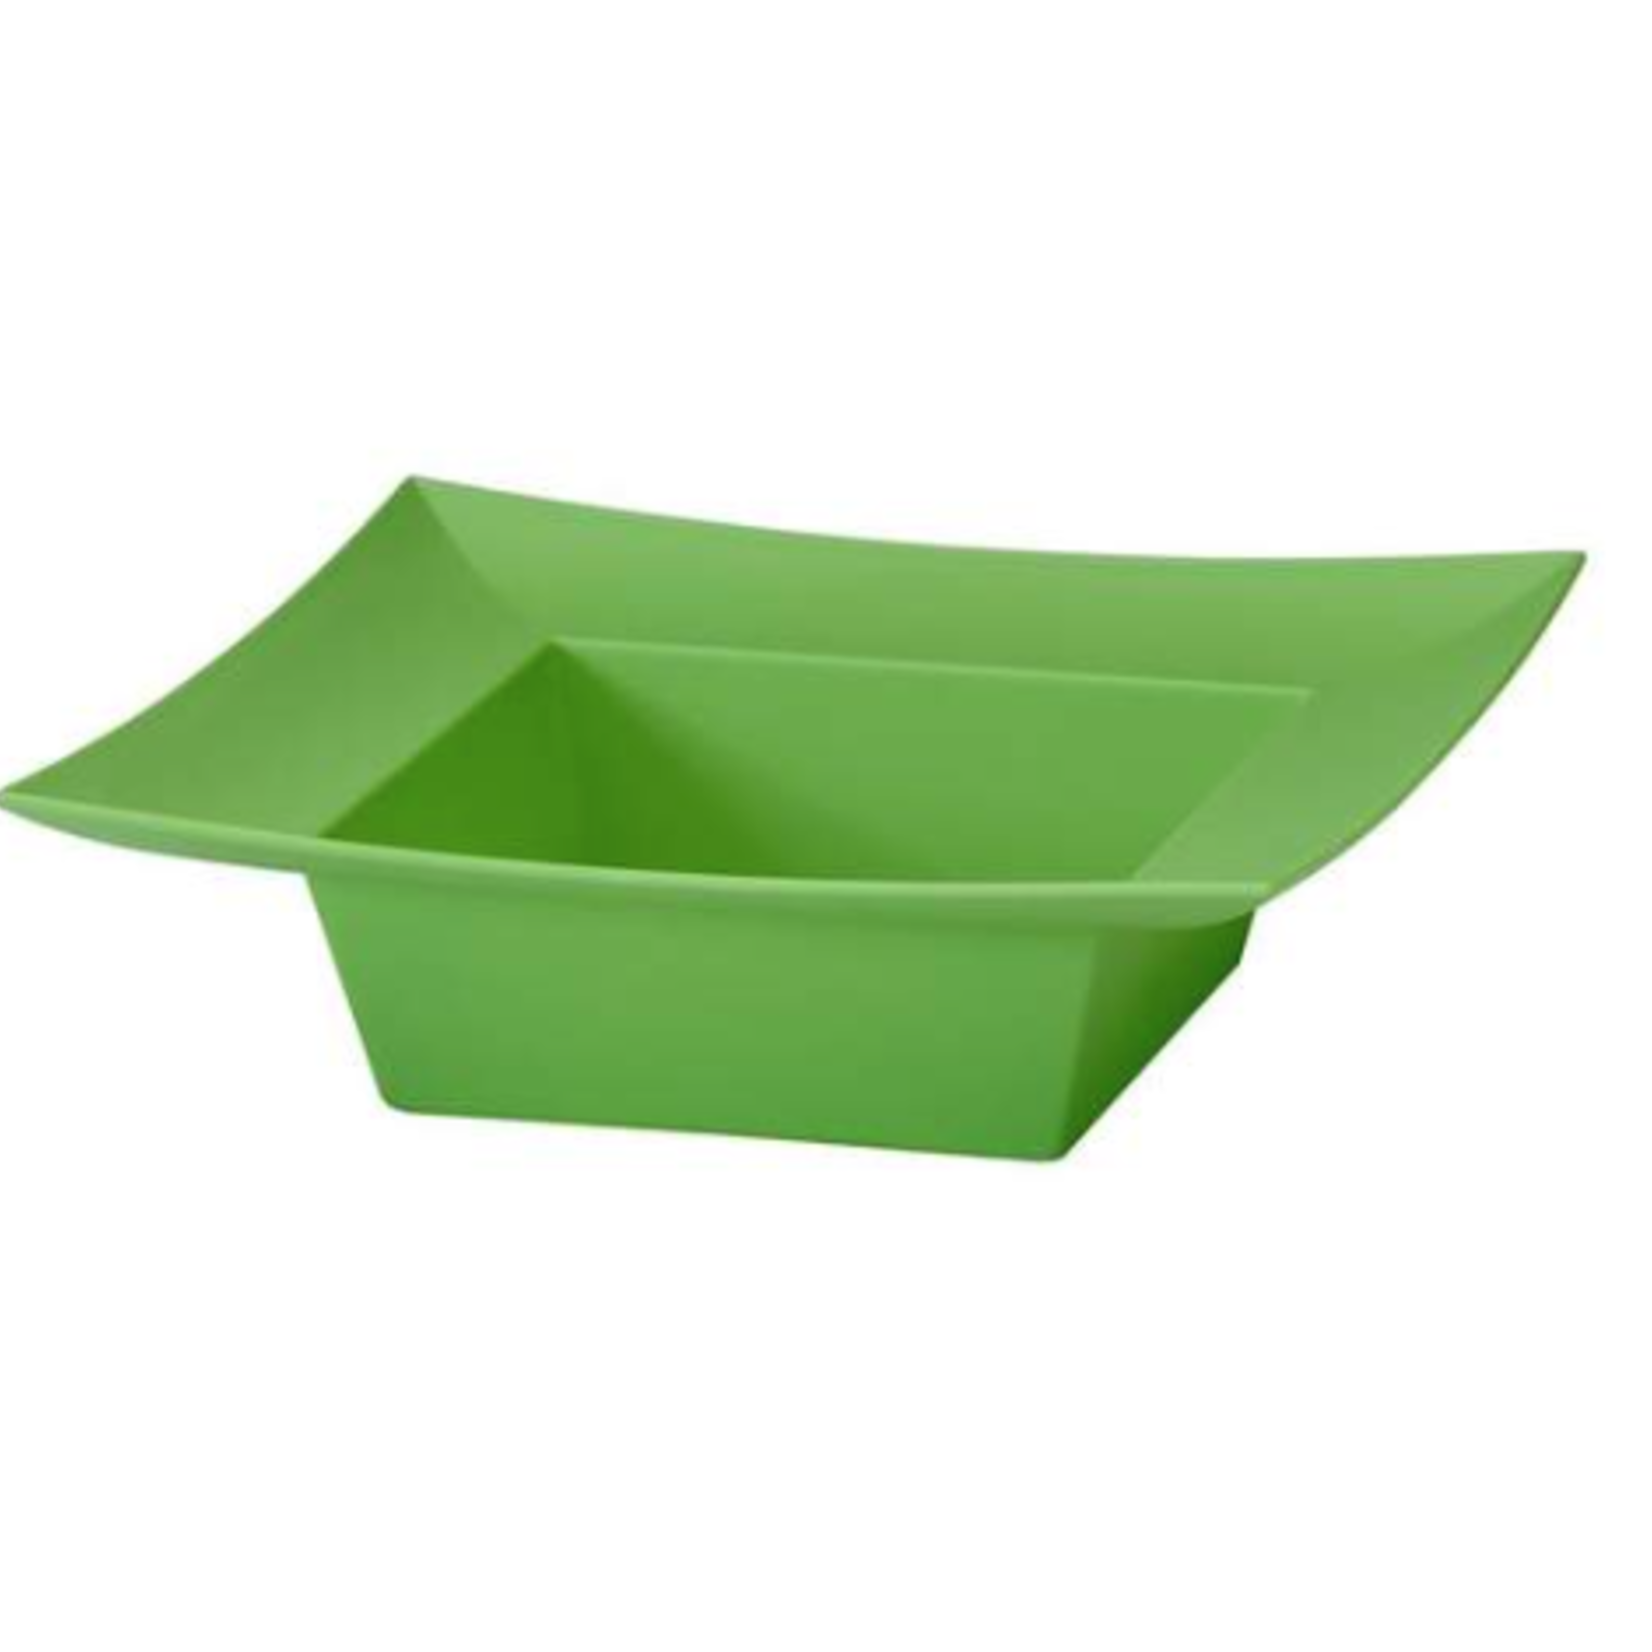 2"h x 5" x 5" inner pot Square Bowl - Apple Green